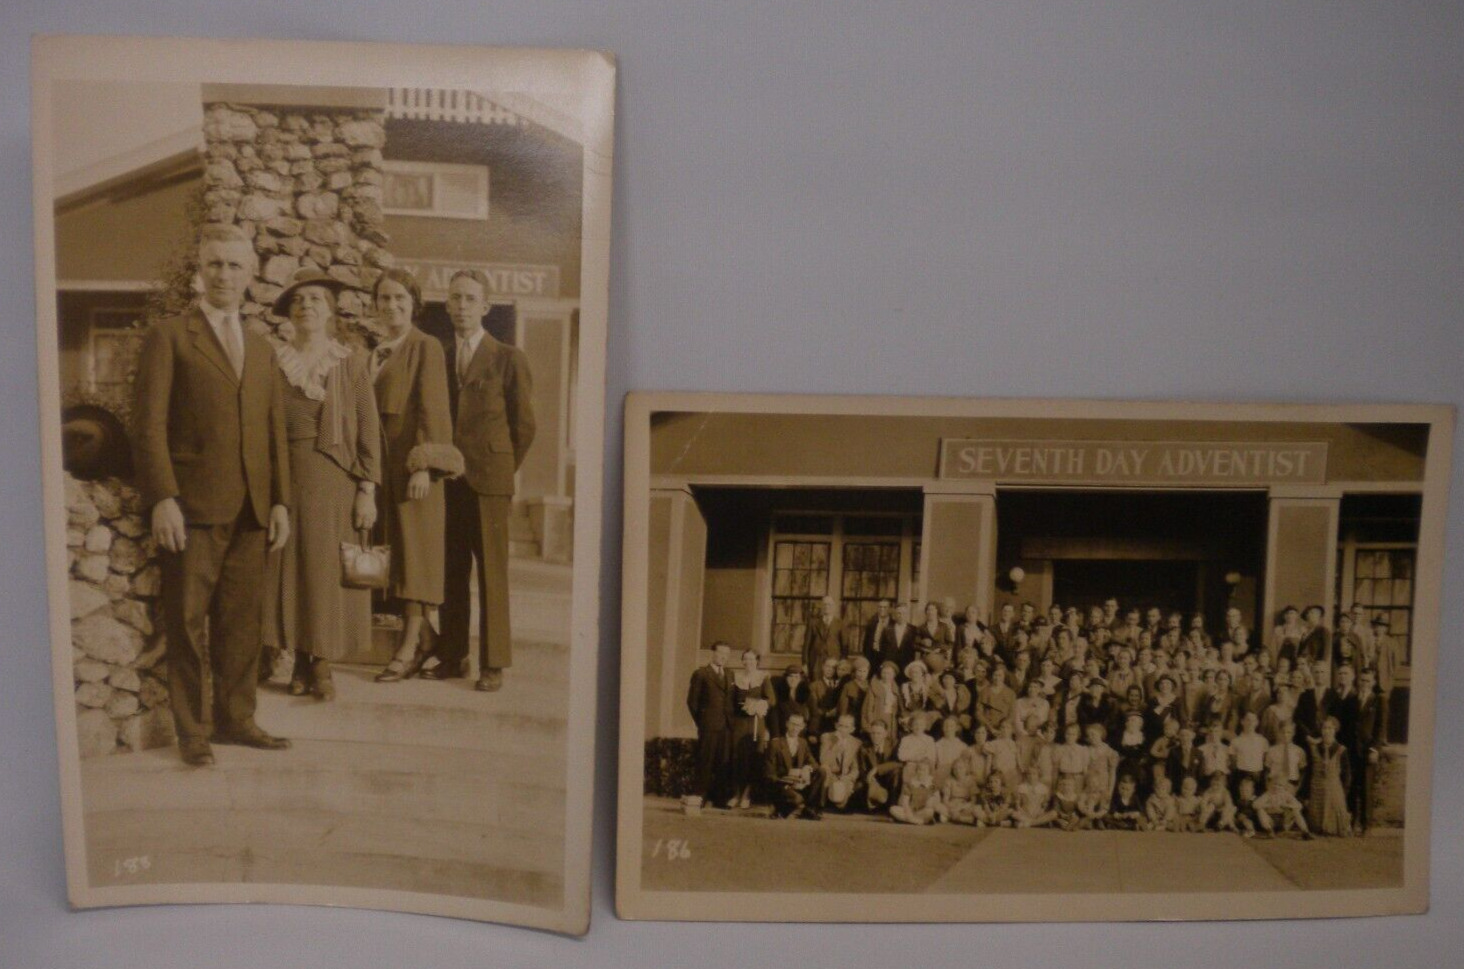 Antique Original Photograph 7th Day Adventist Photos 20s 30s Congregation Church